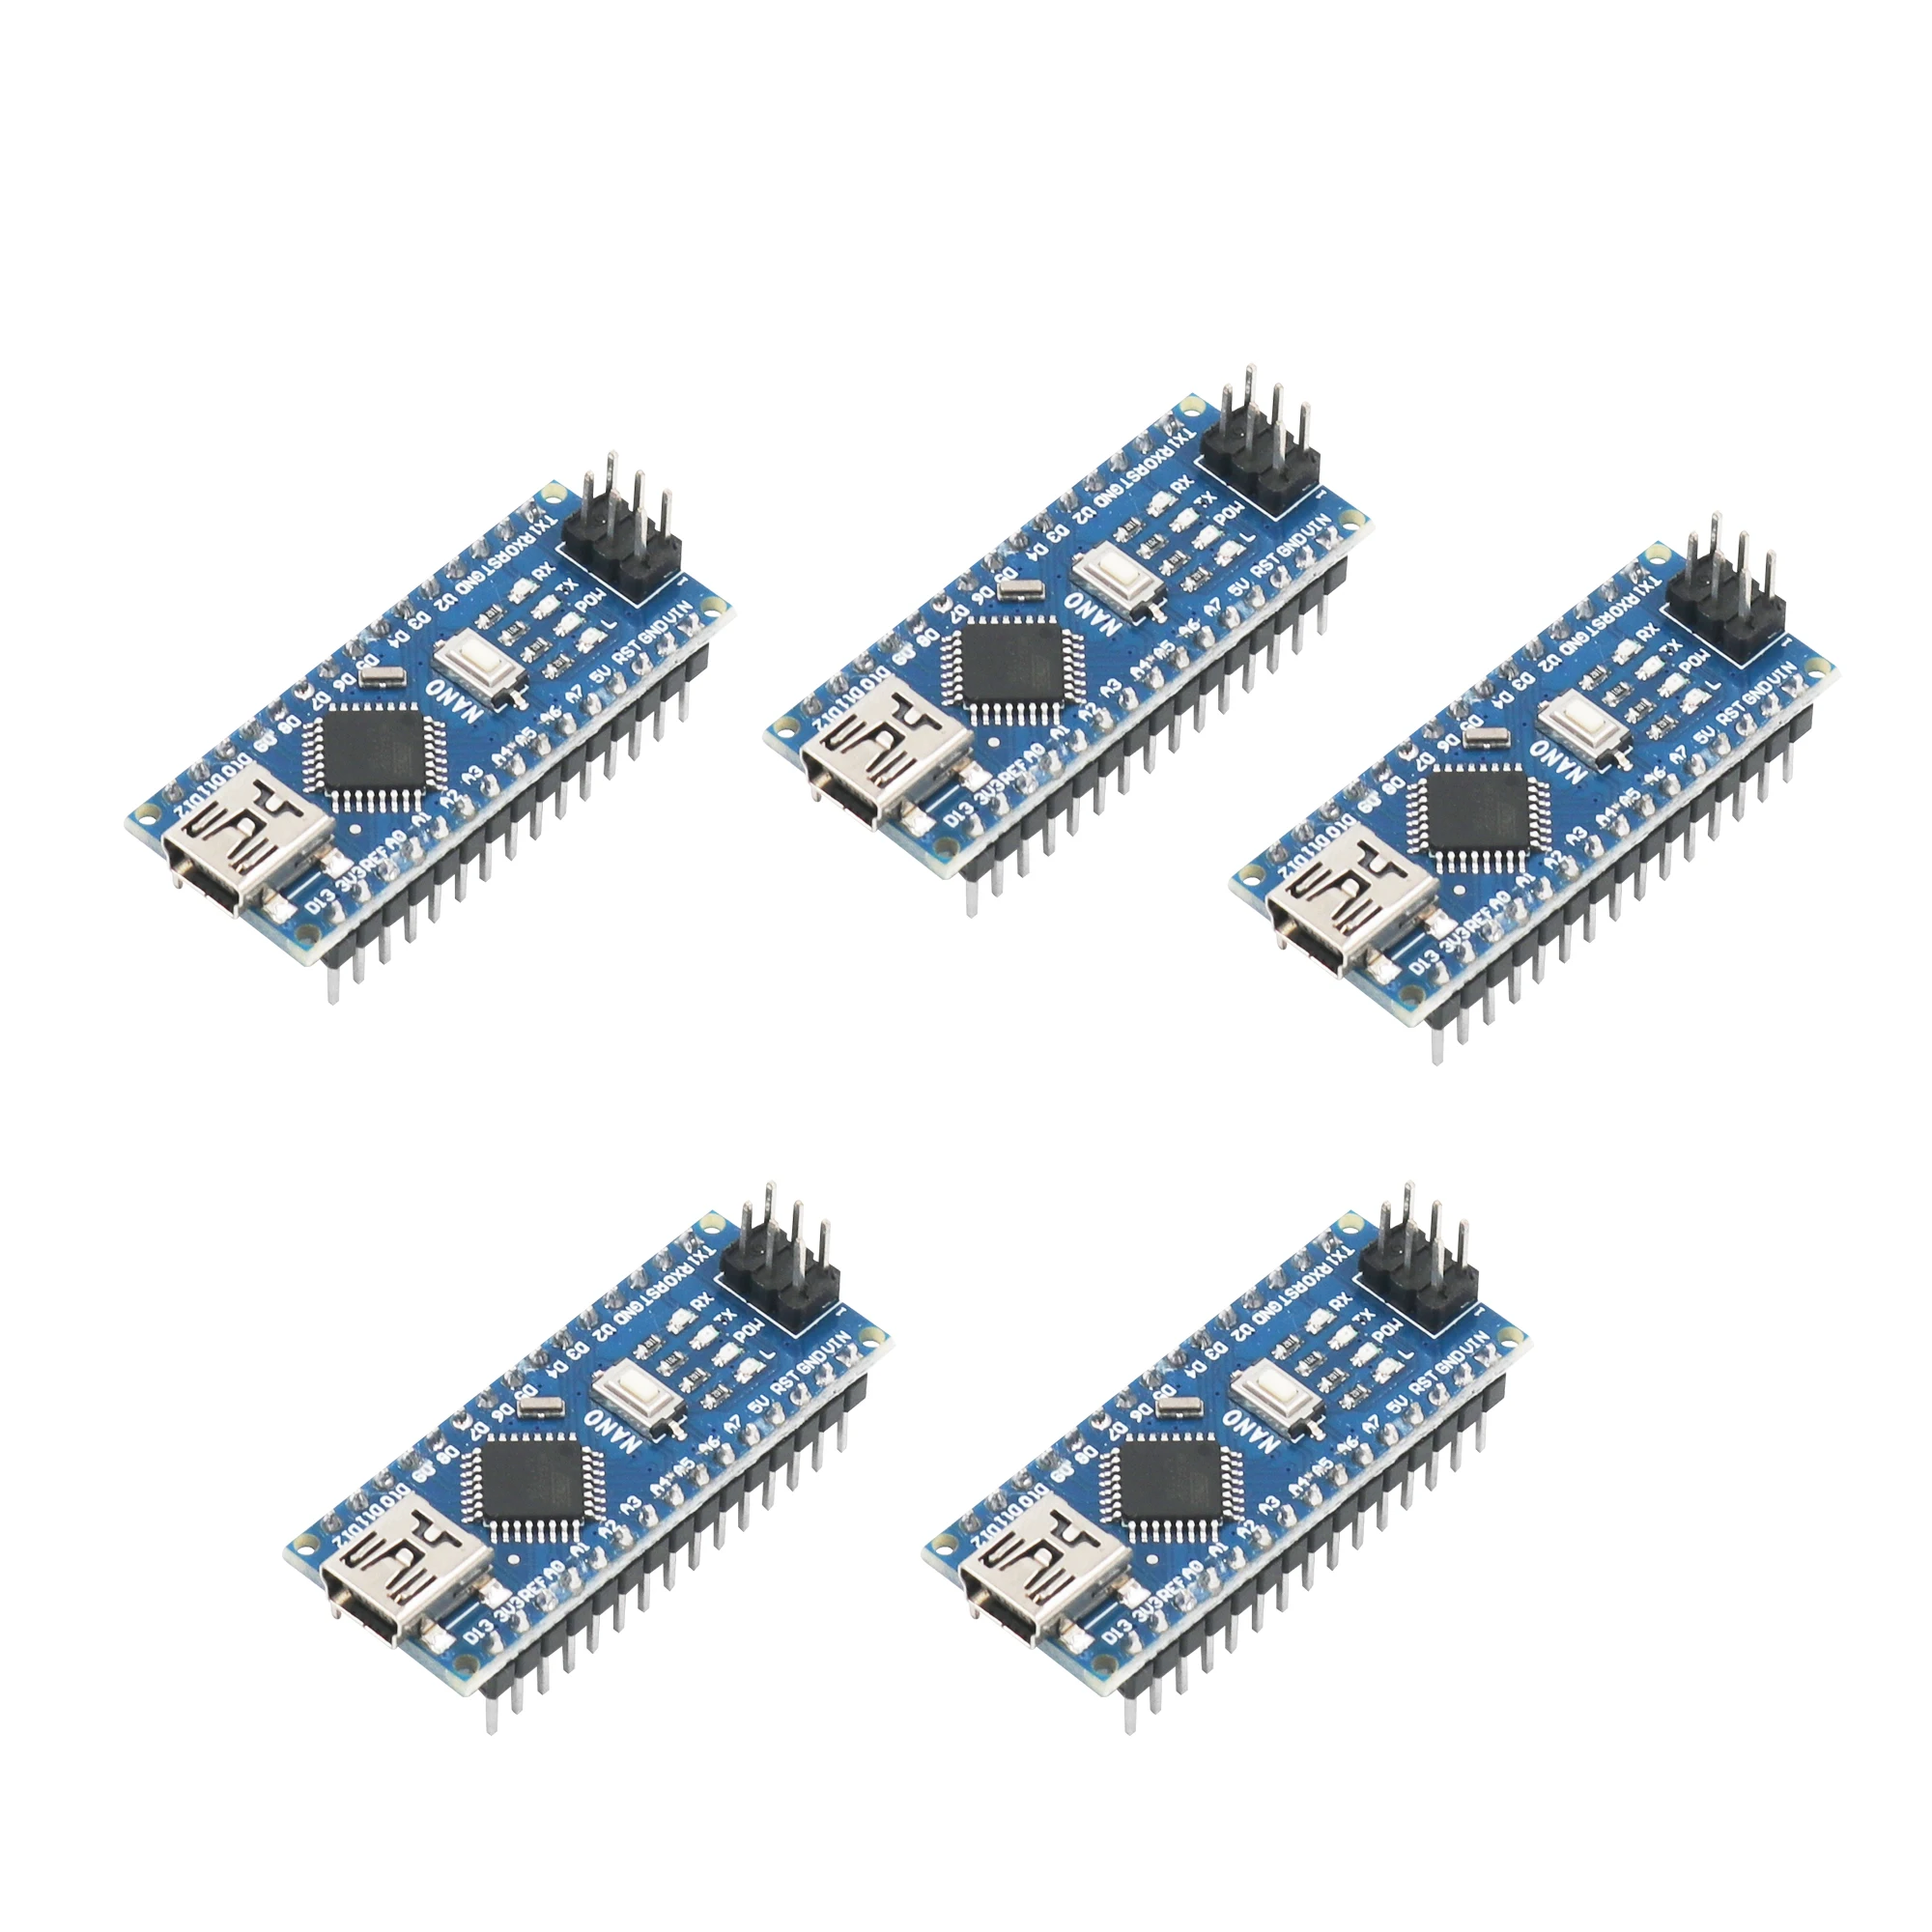 5 шт./лот Nano 3,0 ATmega328P плата контроллера CH340 USB драйвер с кабелем для Arduino